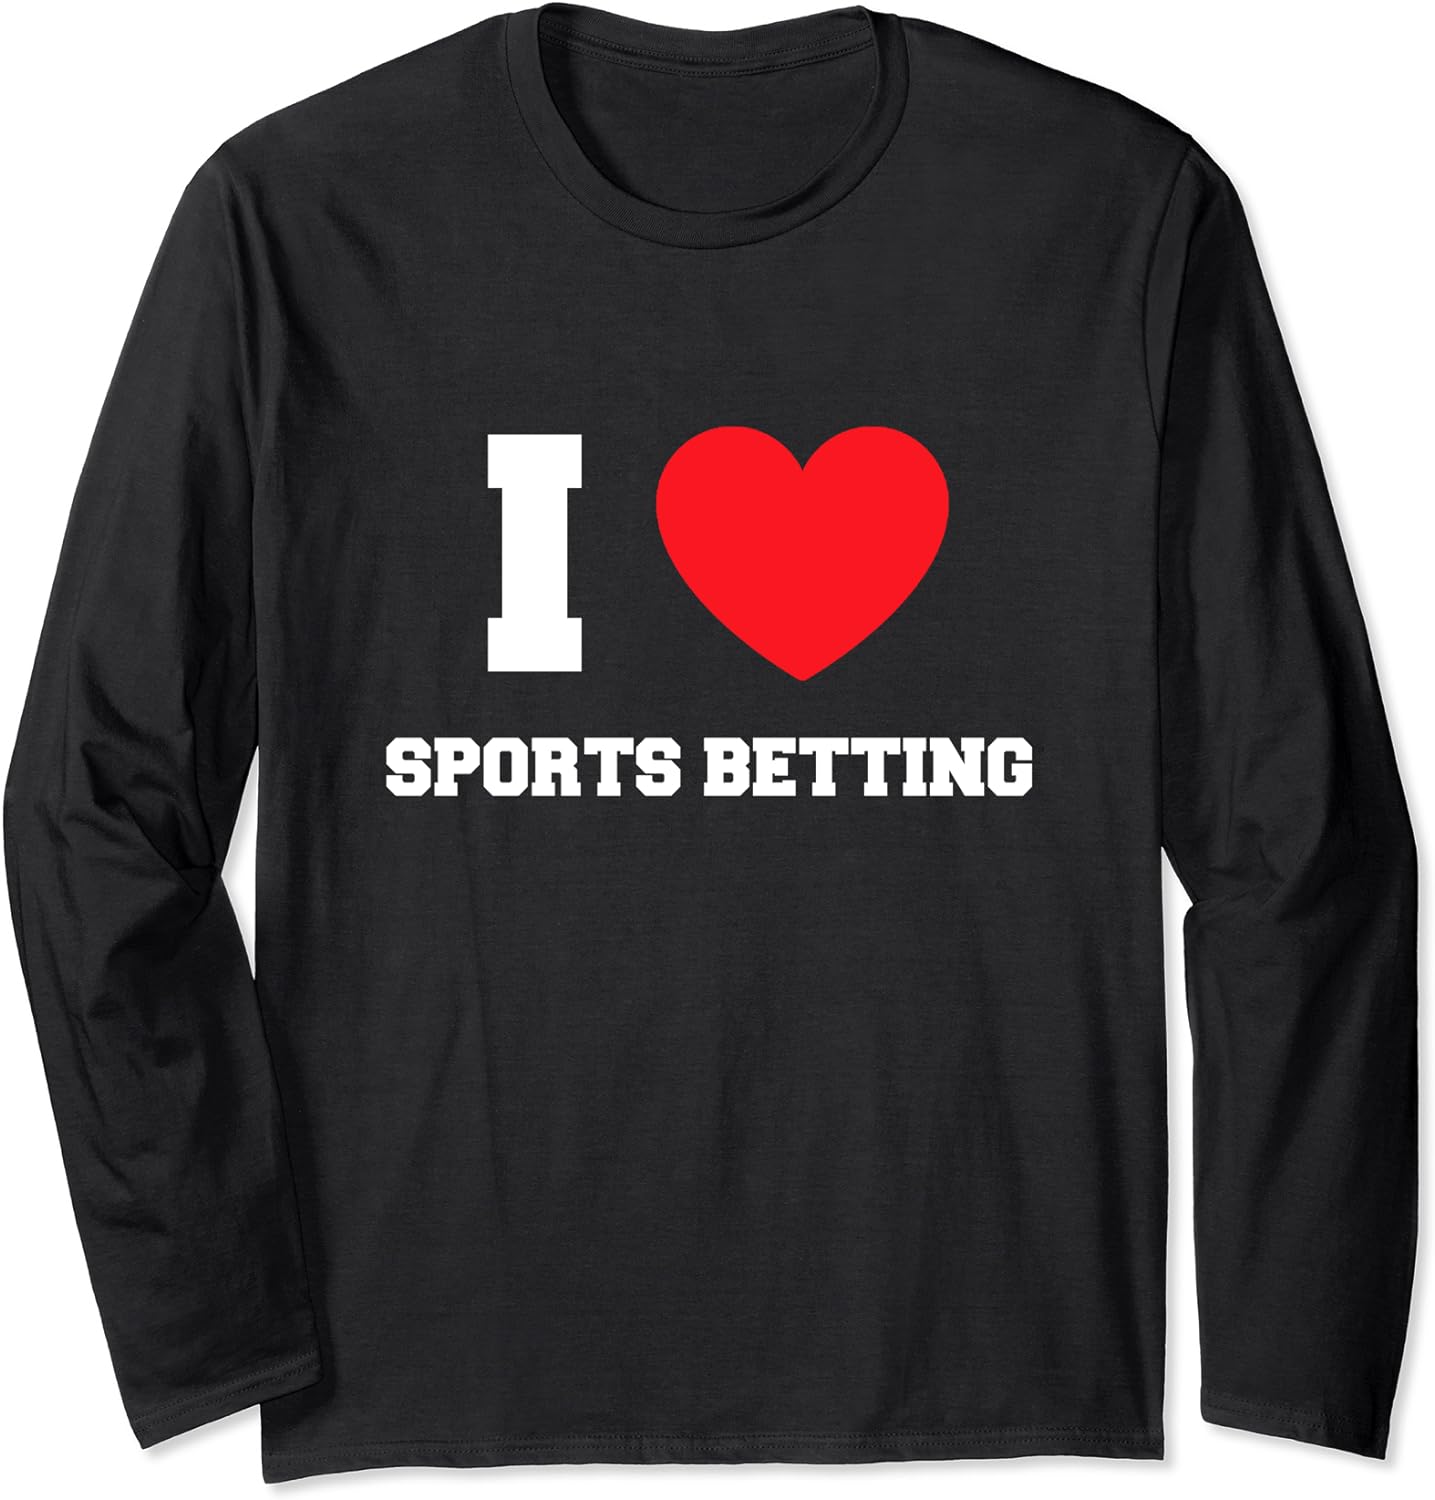 Logo sports betting